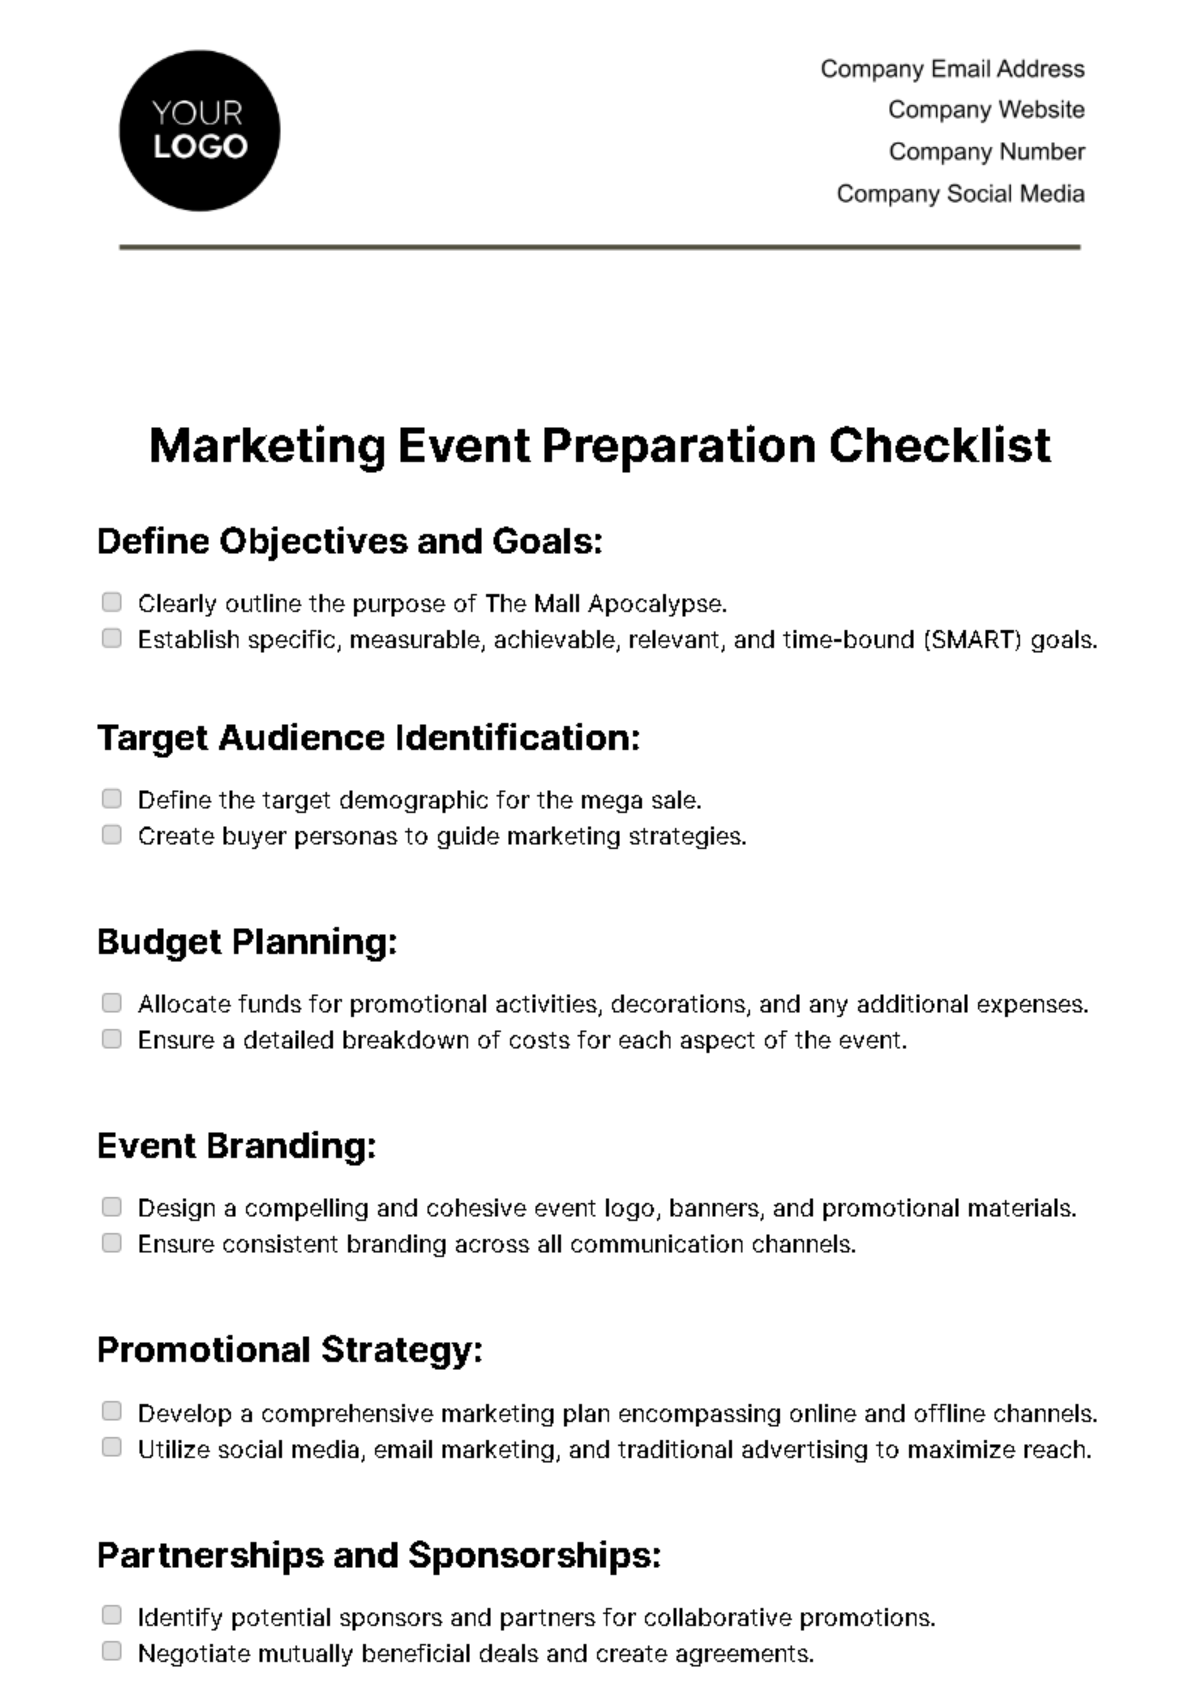 Free Marketing Event Preparation Checklist Template